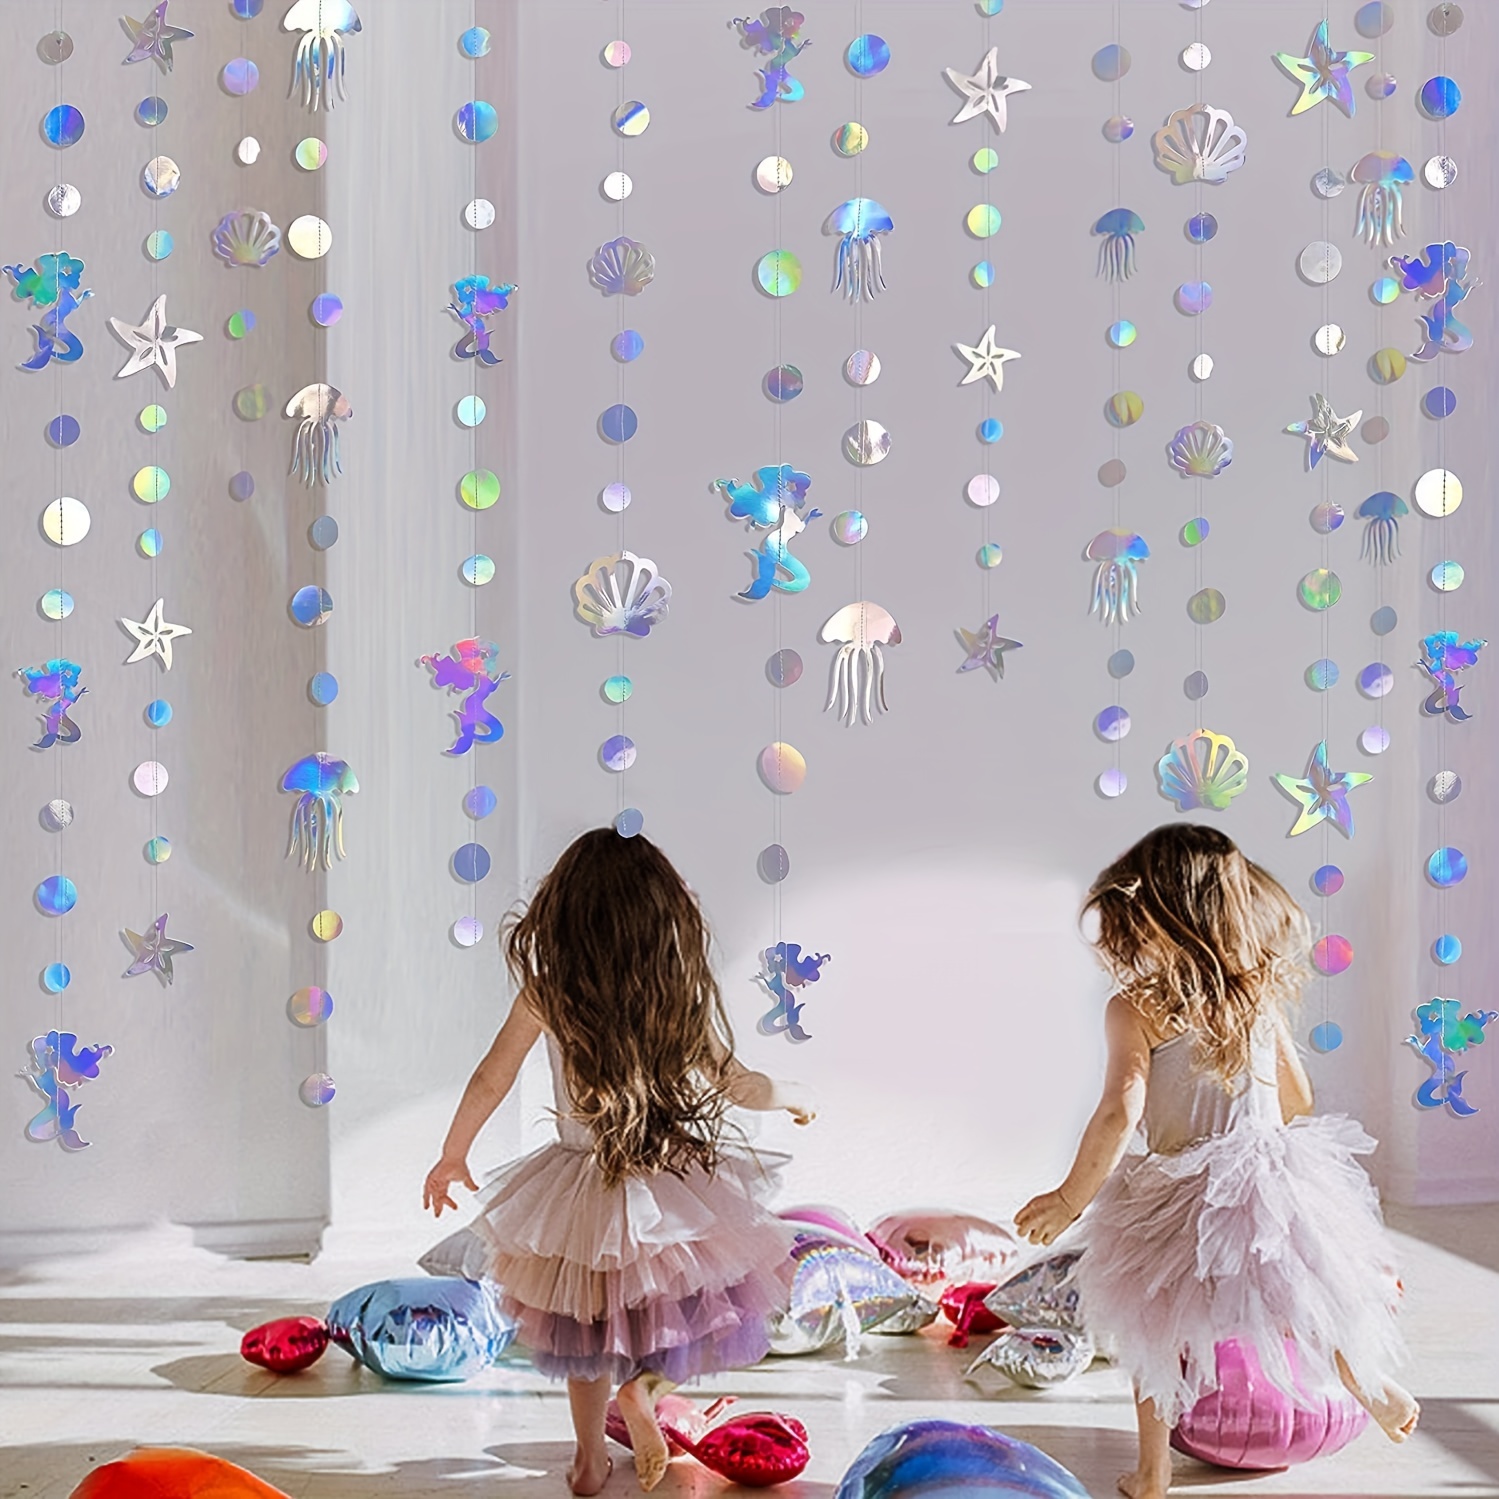 Rainbow Mermaid Garland - Set of Jellyfish, Starfish, Pearl Pull Flower Pendants for Under the Sea/Mermaid Theme Baby Shower, Wedding, and Birthday Party Decorations